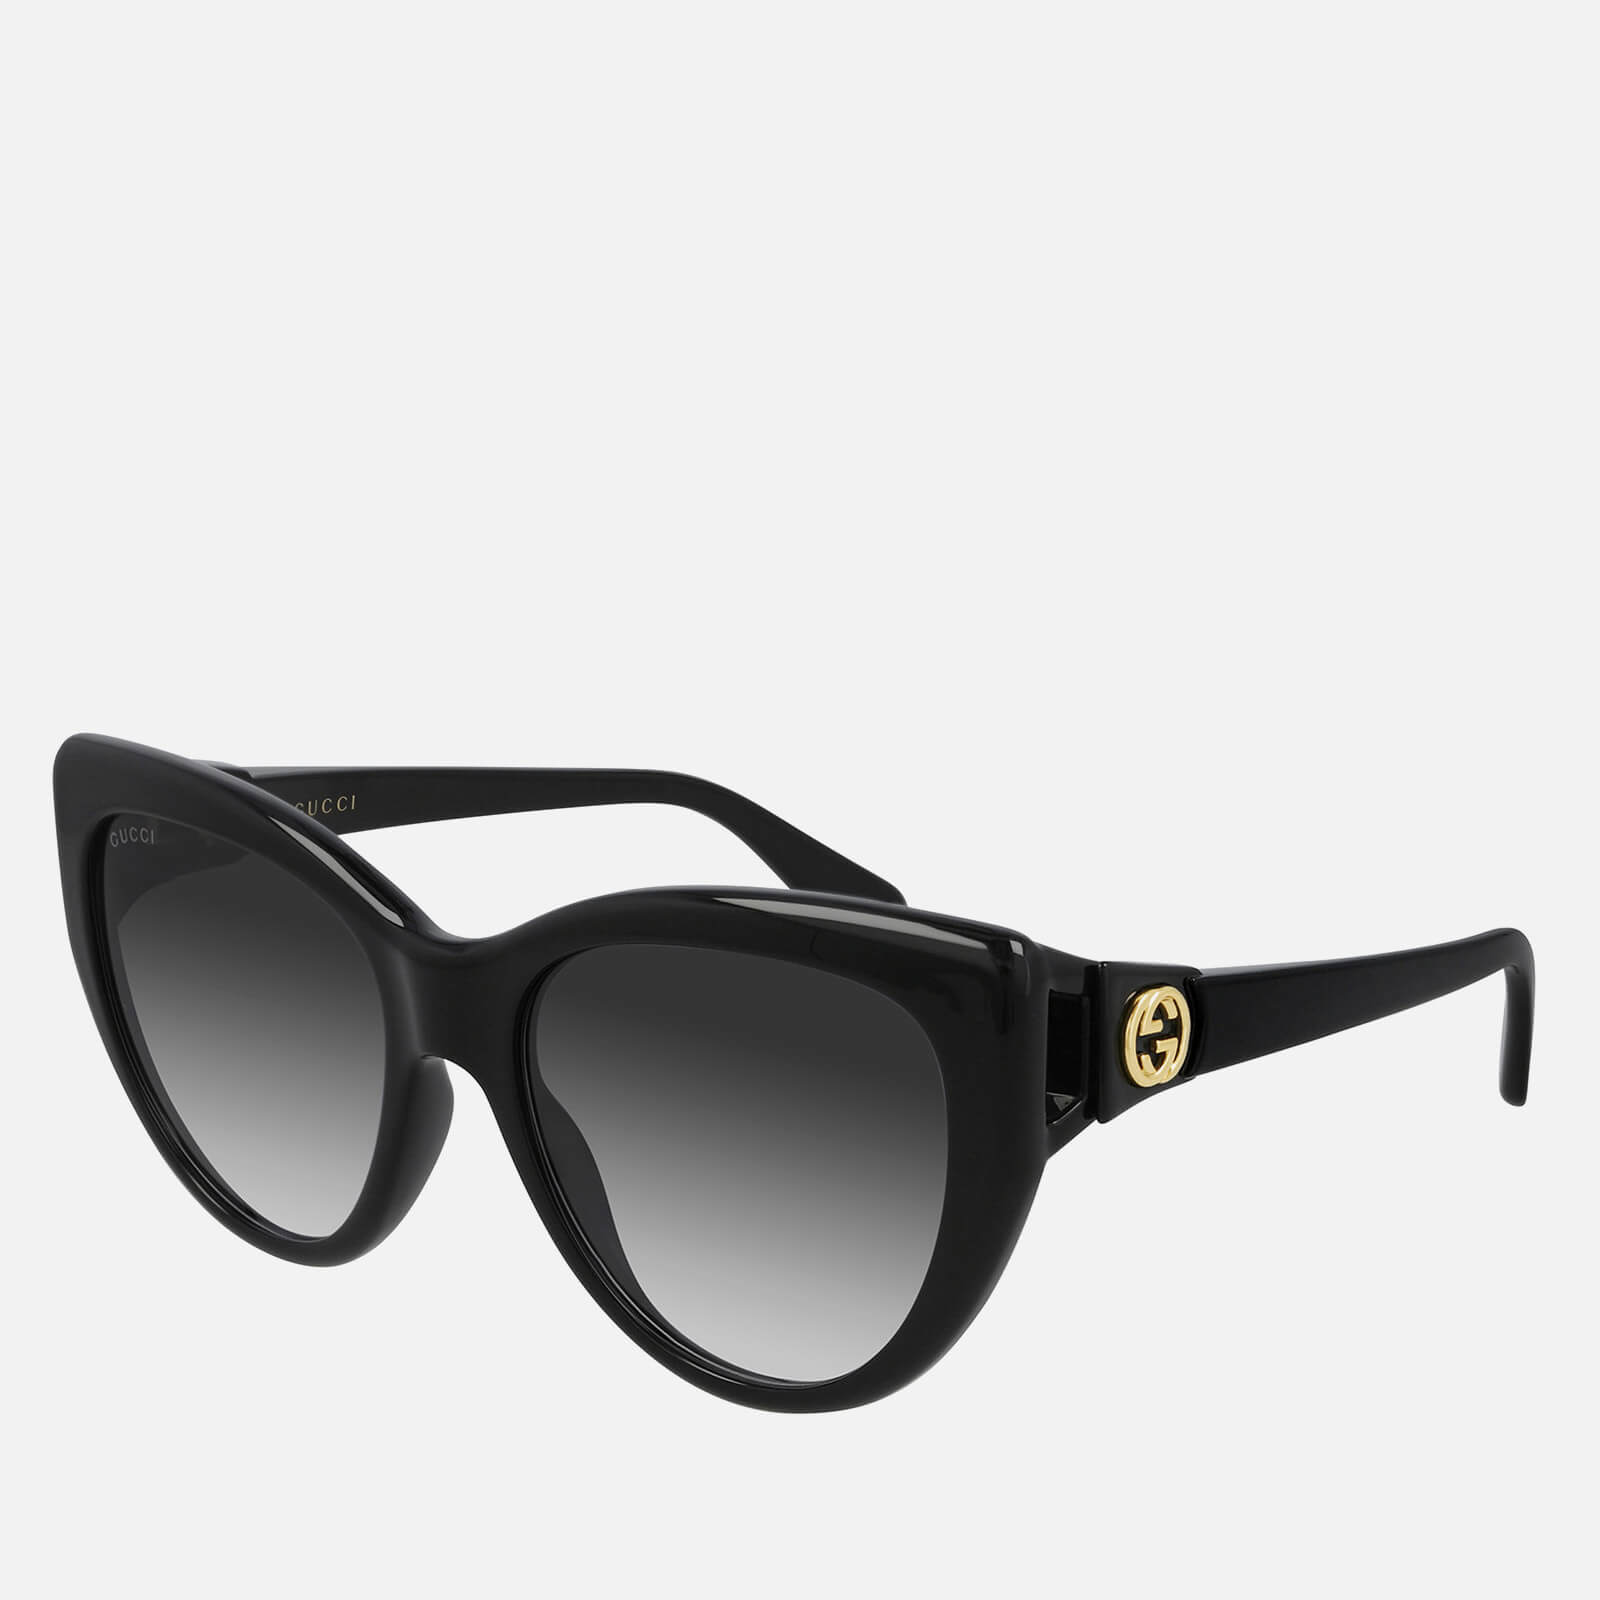 Gucci Women's 70's Fork Acetate Sunglasses - Black/Black/Grey